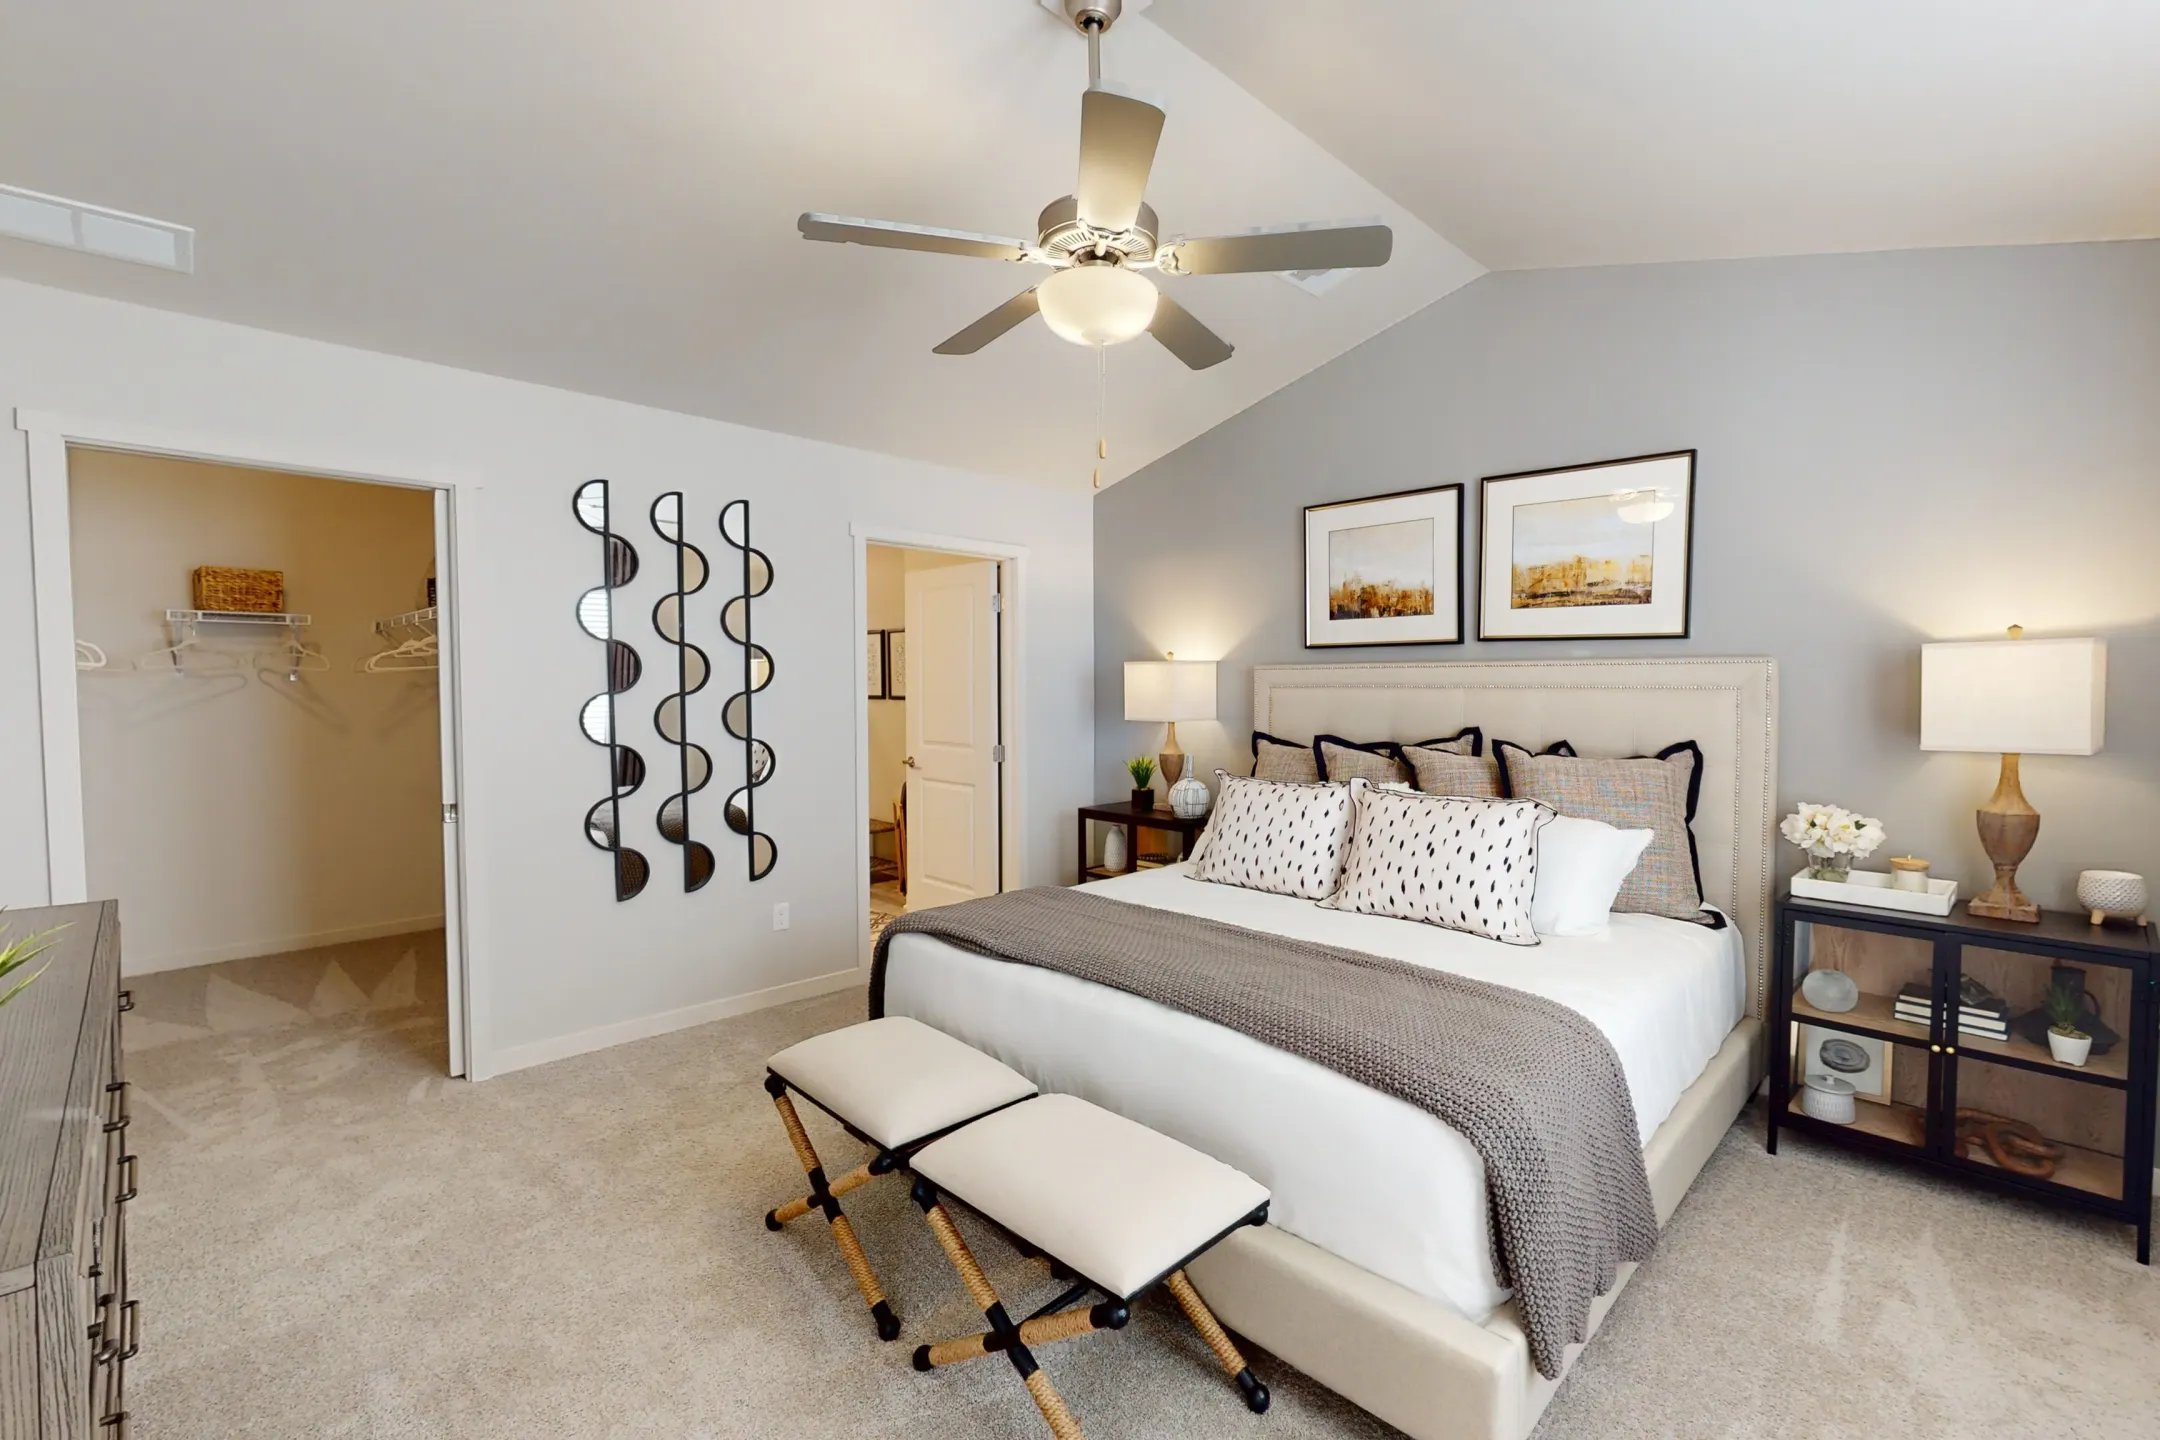 Bedroom - Insignia Apartments - Clarkston, MI